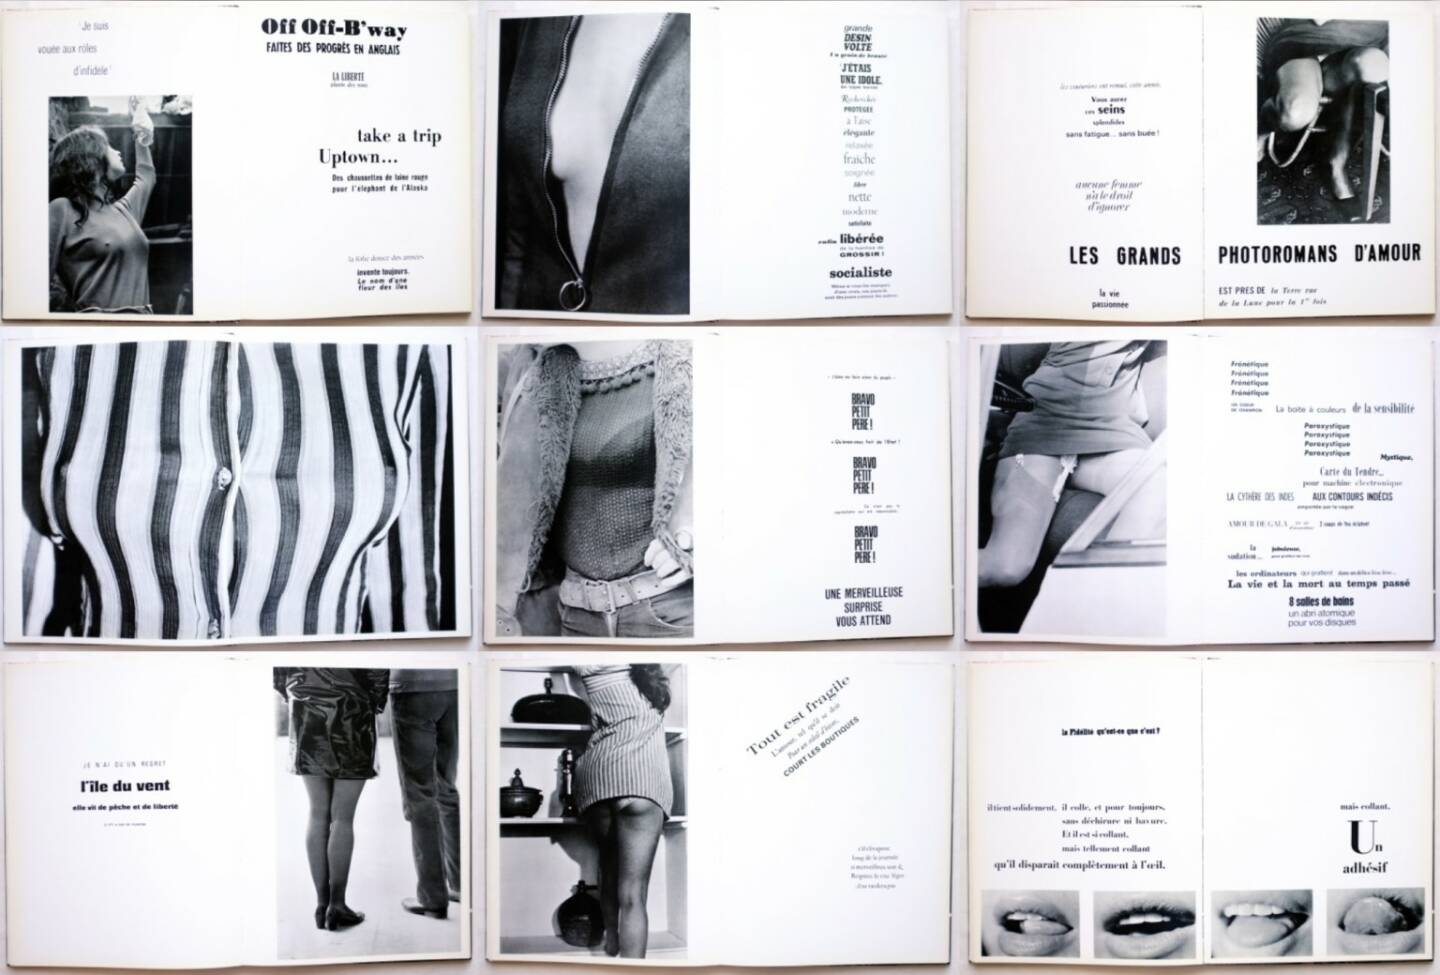 Marc Attali & Jacques Delfau - Les érotiques du regard - Andre Balland 1968, Beispielseiten, sample spreads - http://josefchladek.com/book/attali_marc_jacques_delfau_-_les_erotiques_du_regard